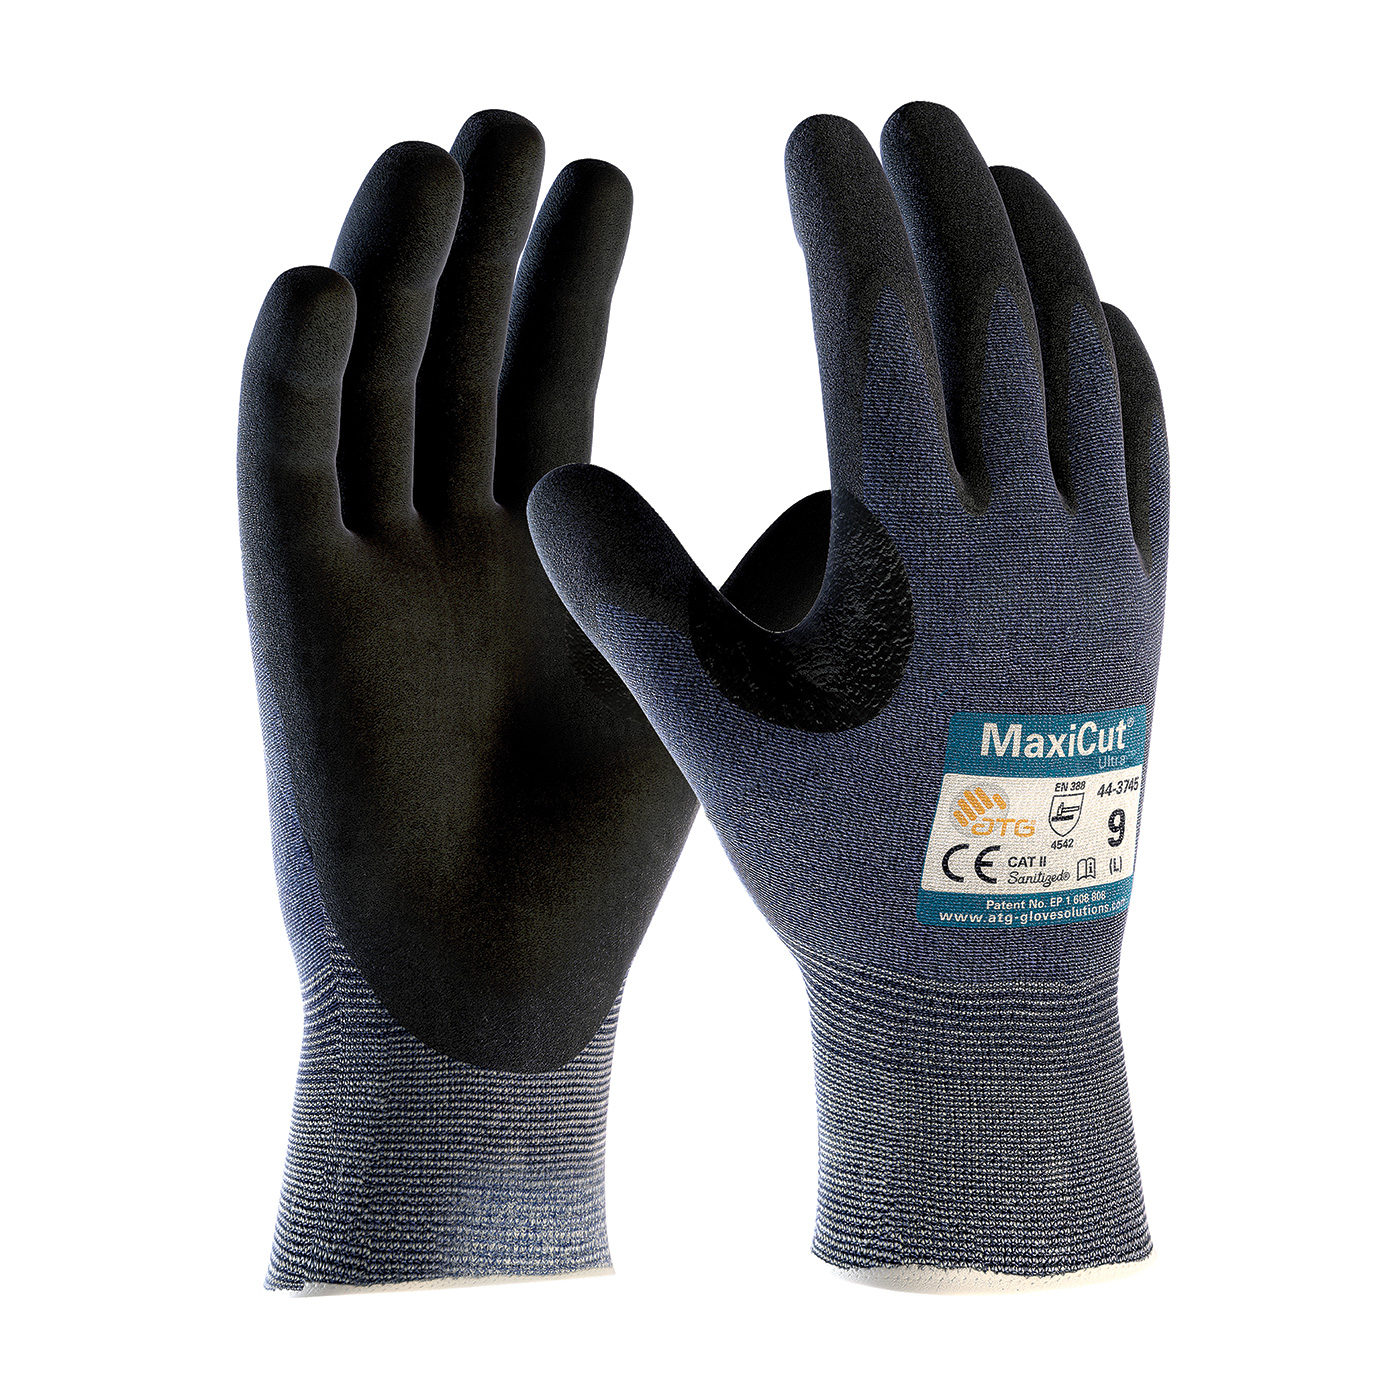 PIP 44-3745/M MaxiCut Ultra Seamless Knit Engineered Yarn Glove with Premium Nitrile Coated MicroFoam Grip on Palm & Fingers - Medium PID-44 3745 M